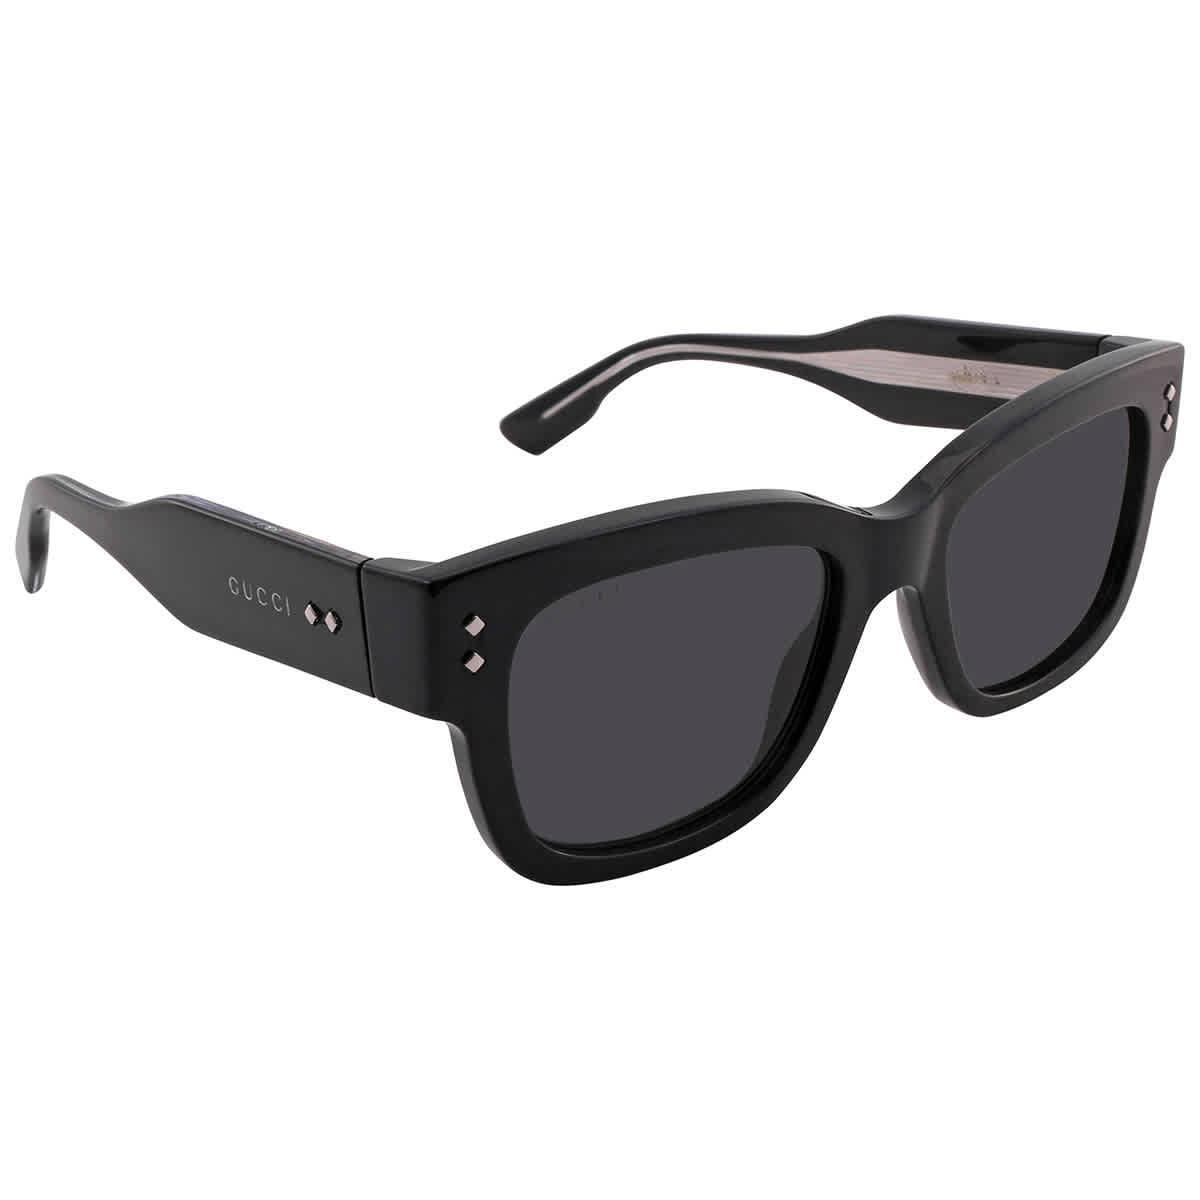 Gucci Mens GG1217S 53mm Square Sunglasses Product Image